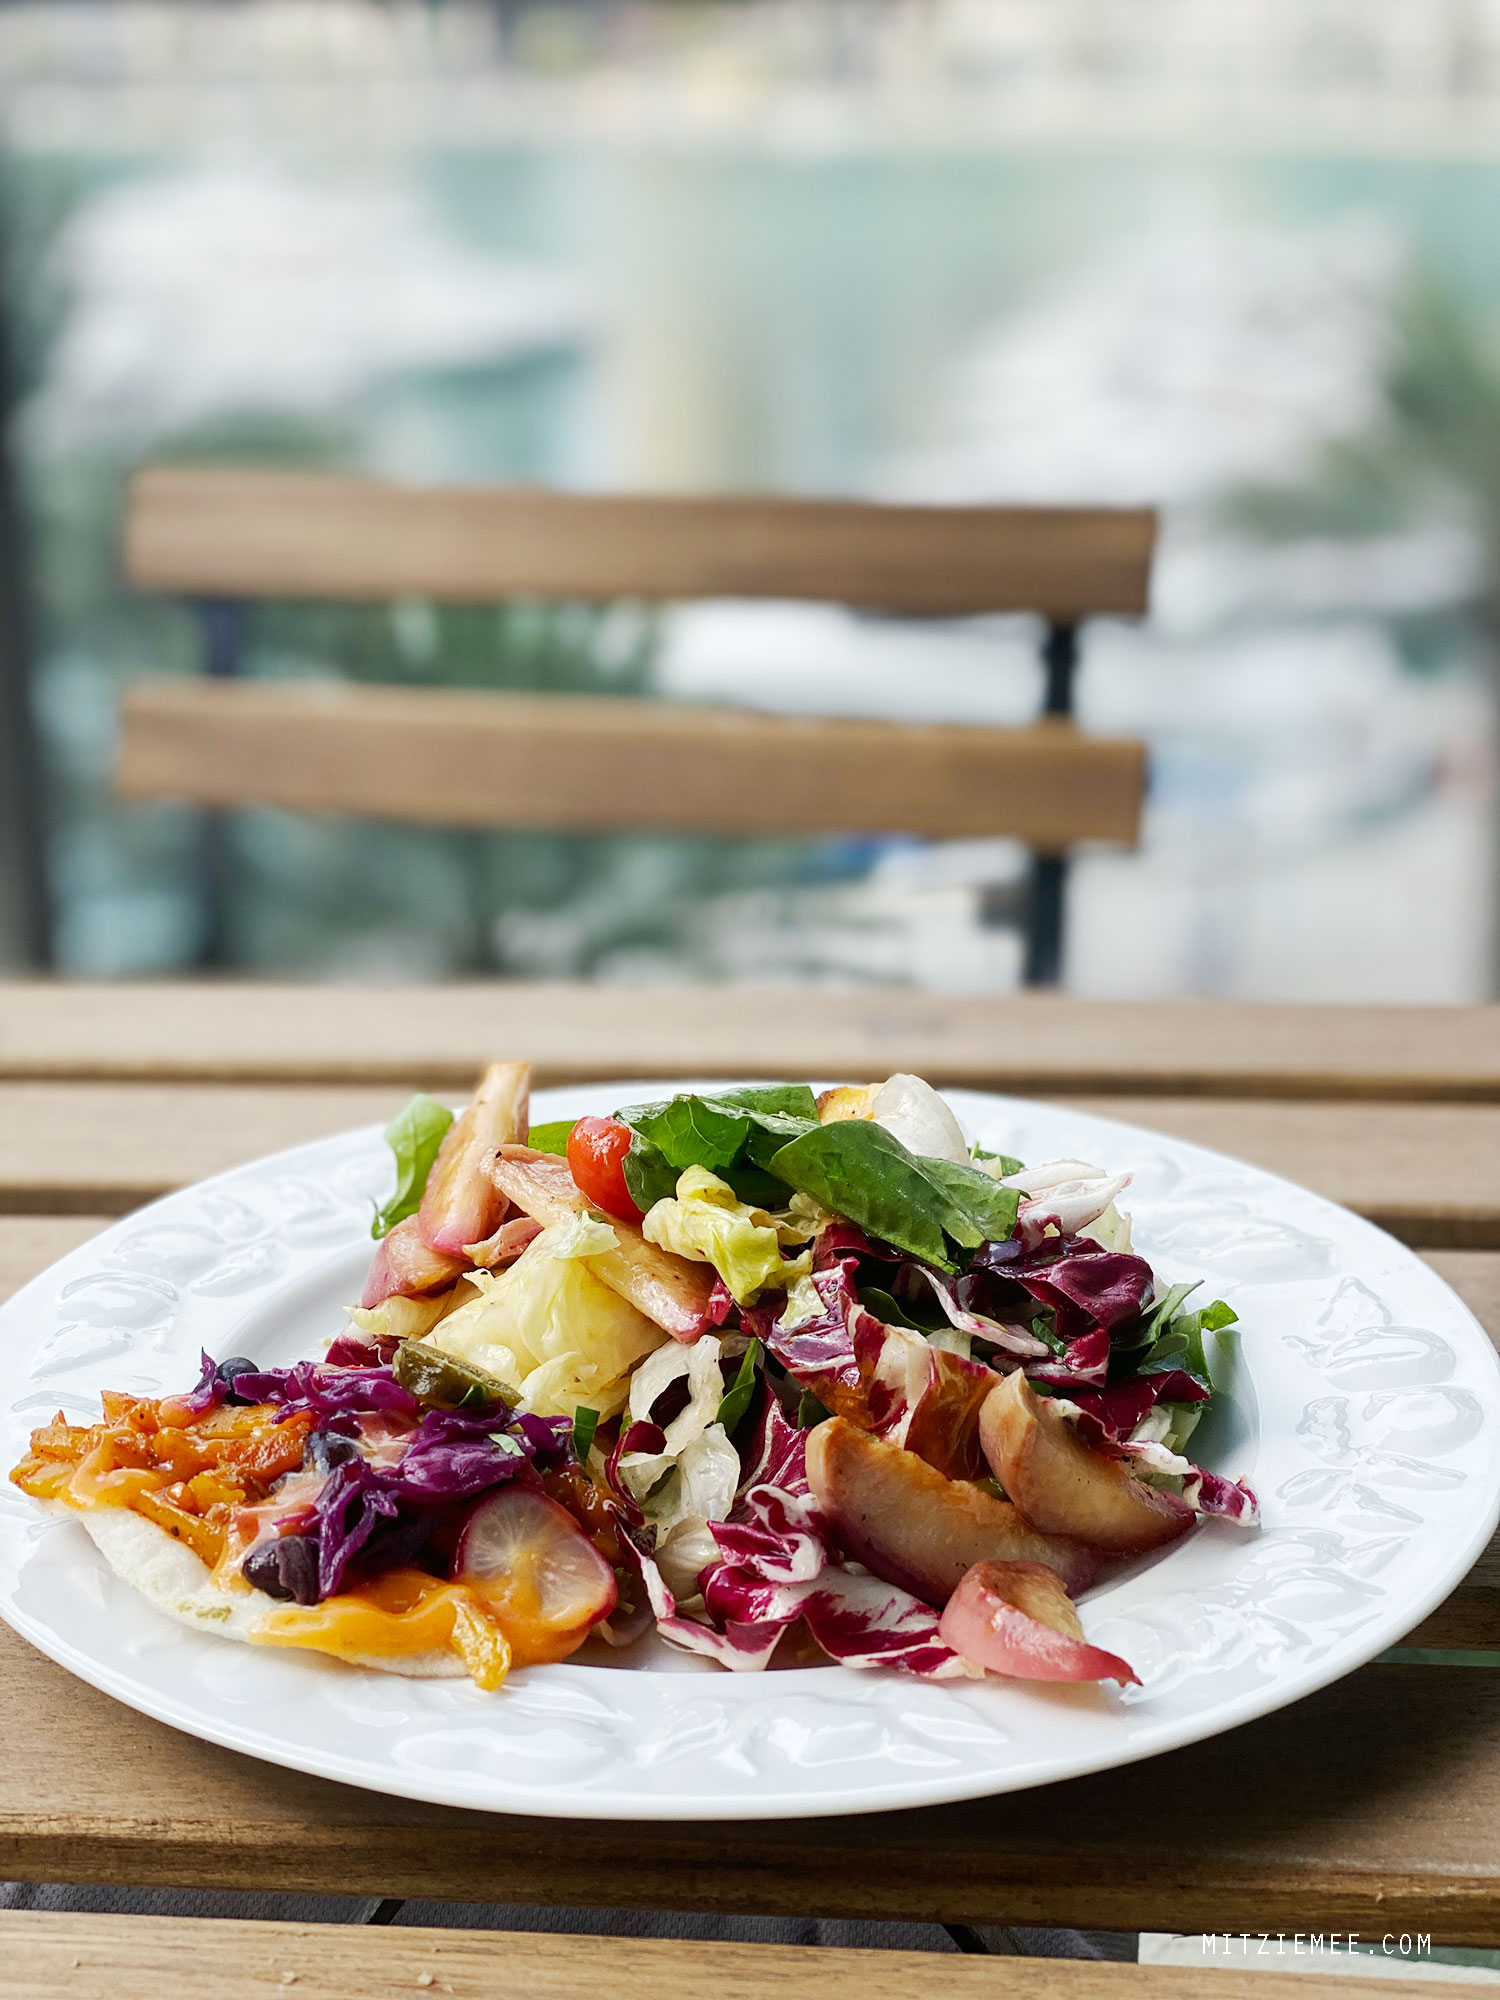 The vegan meal plan at Soul Santé Dubai